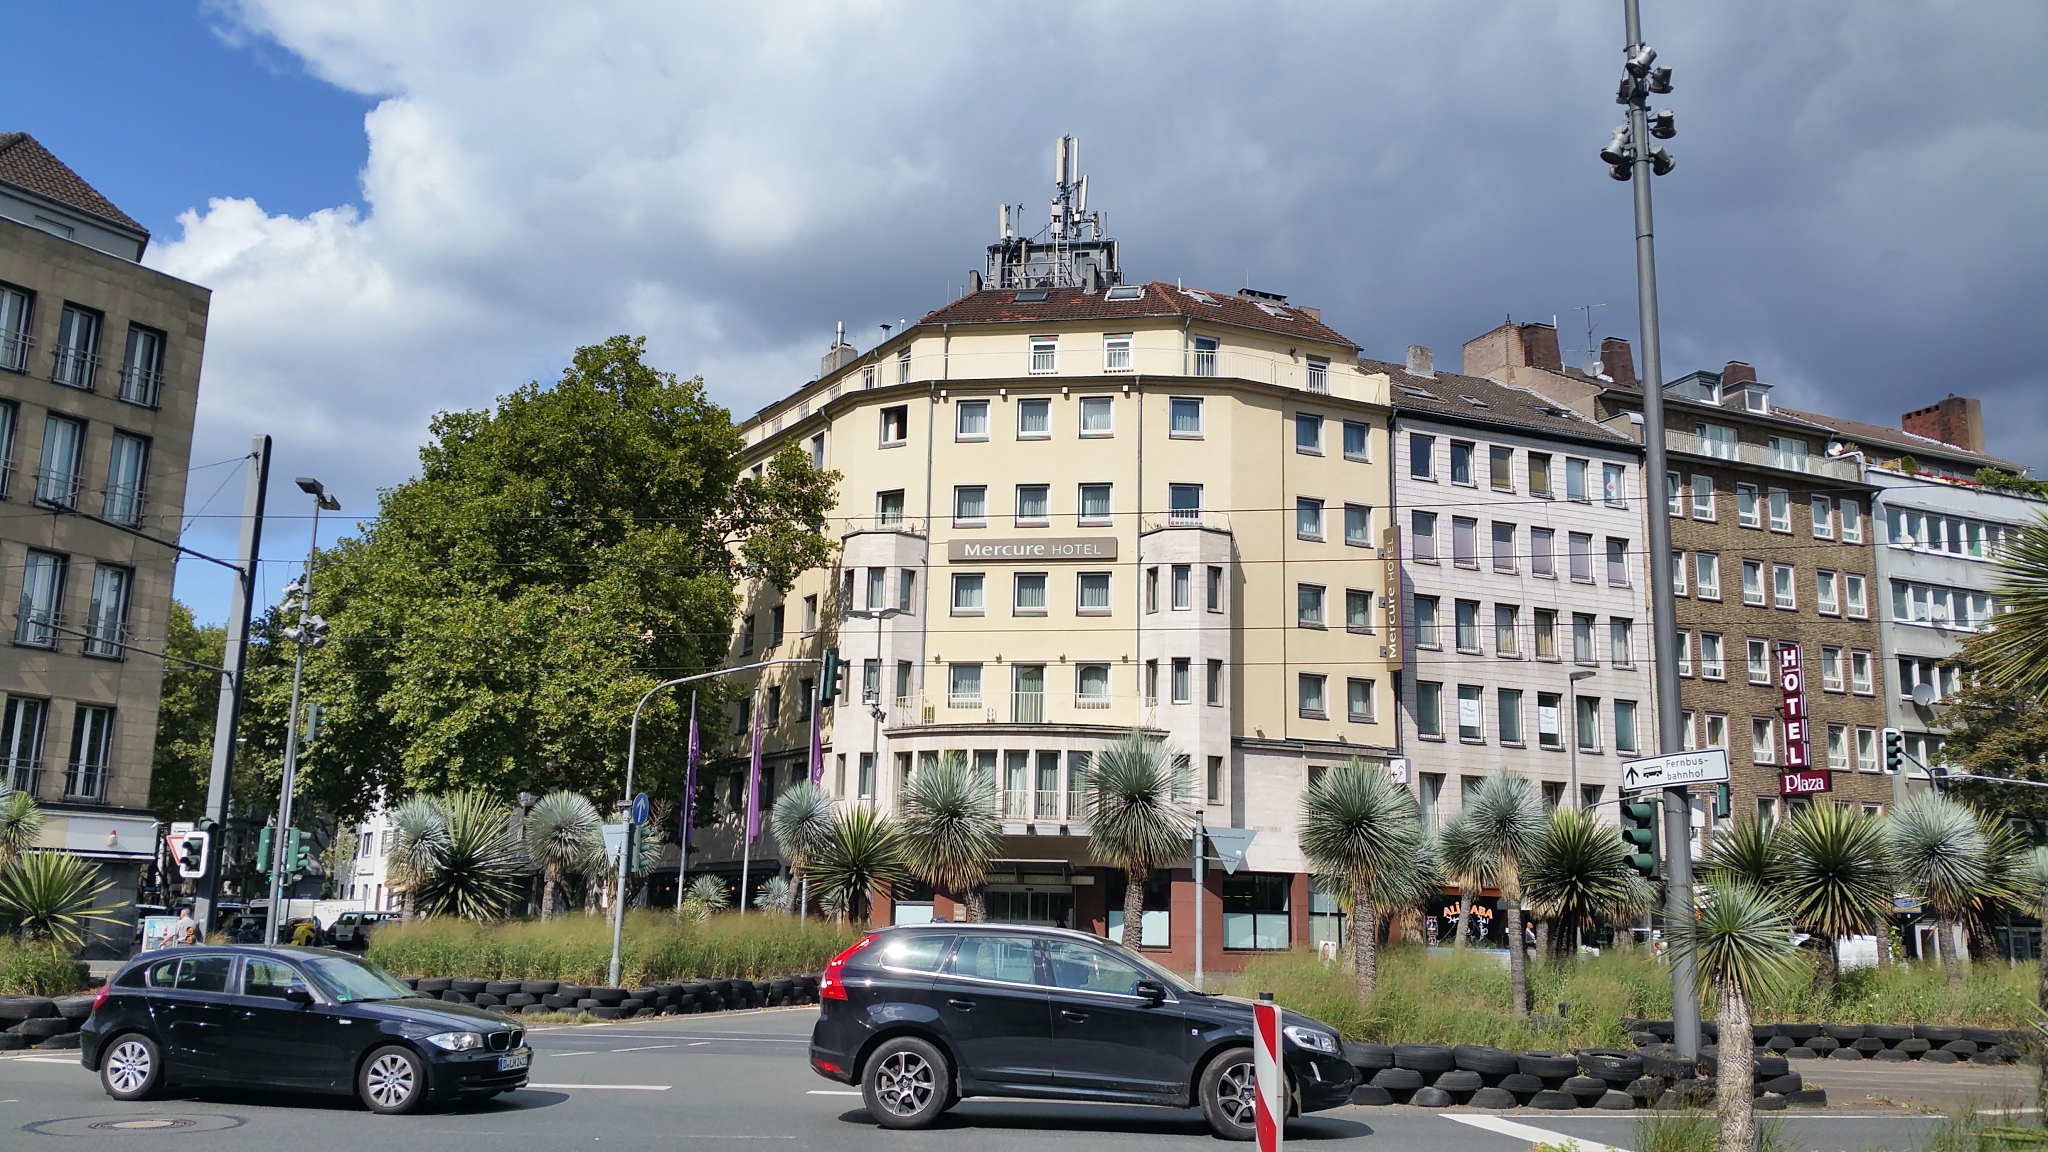 Bild 1 Mercure Hotel Duesseldorf City Center in Duesseldorf